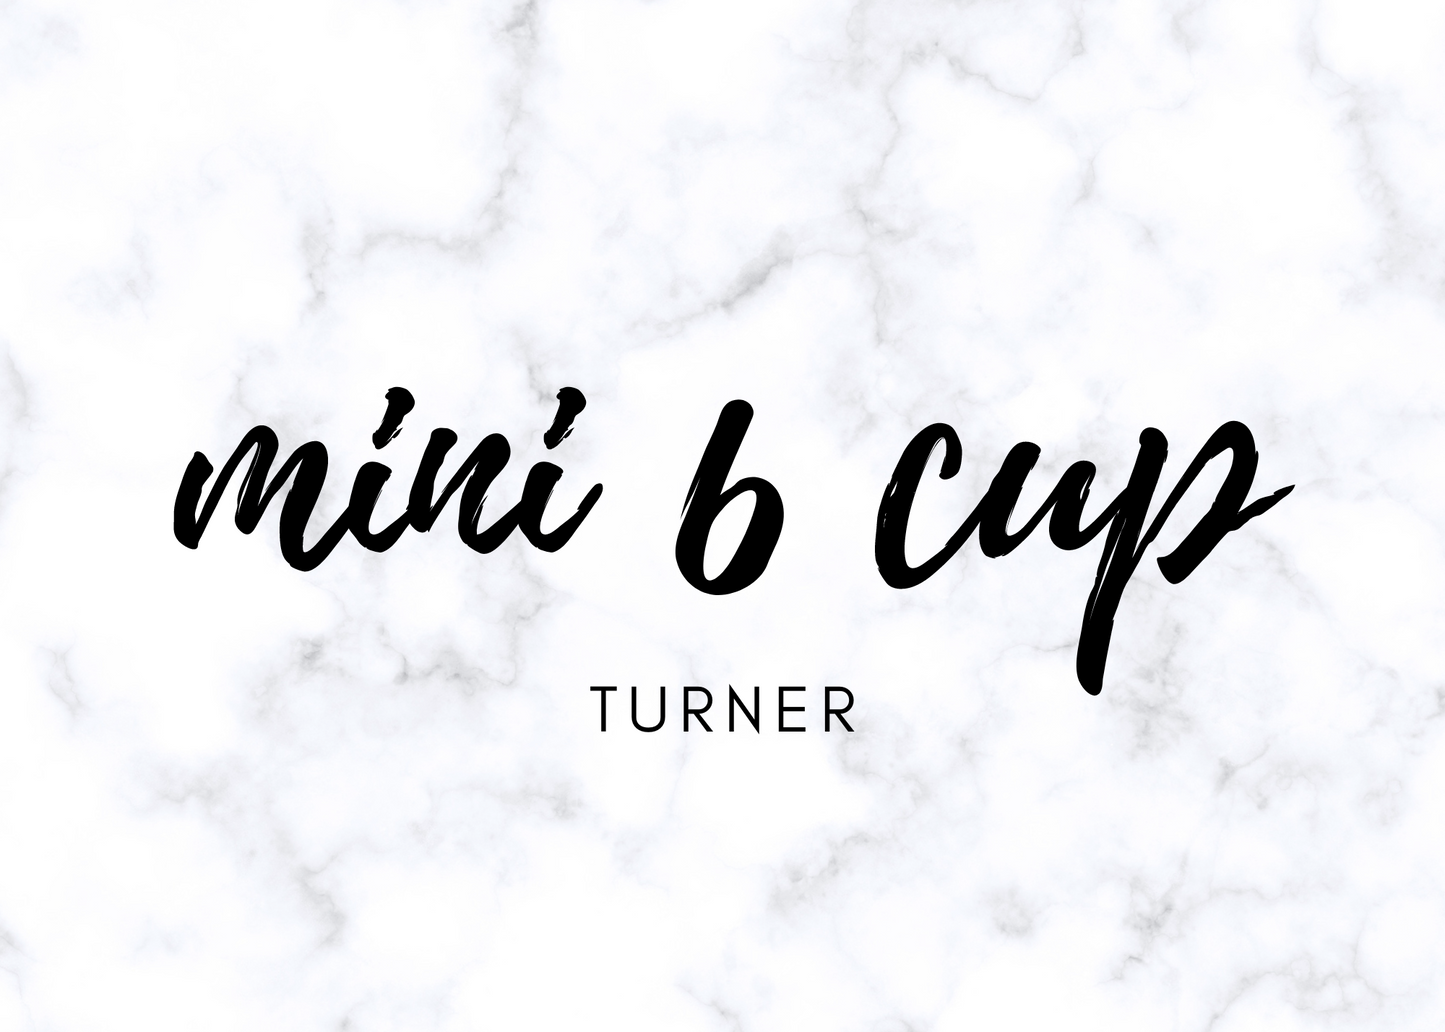 MINI SIX (6) Cup Turner